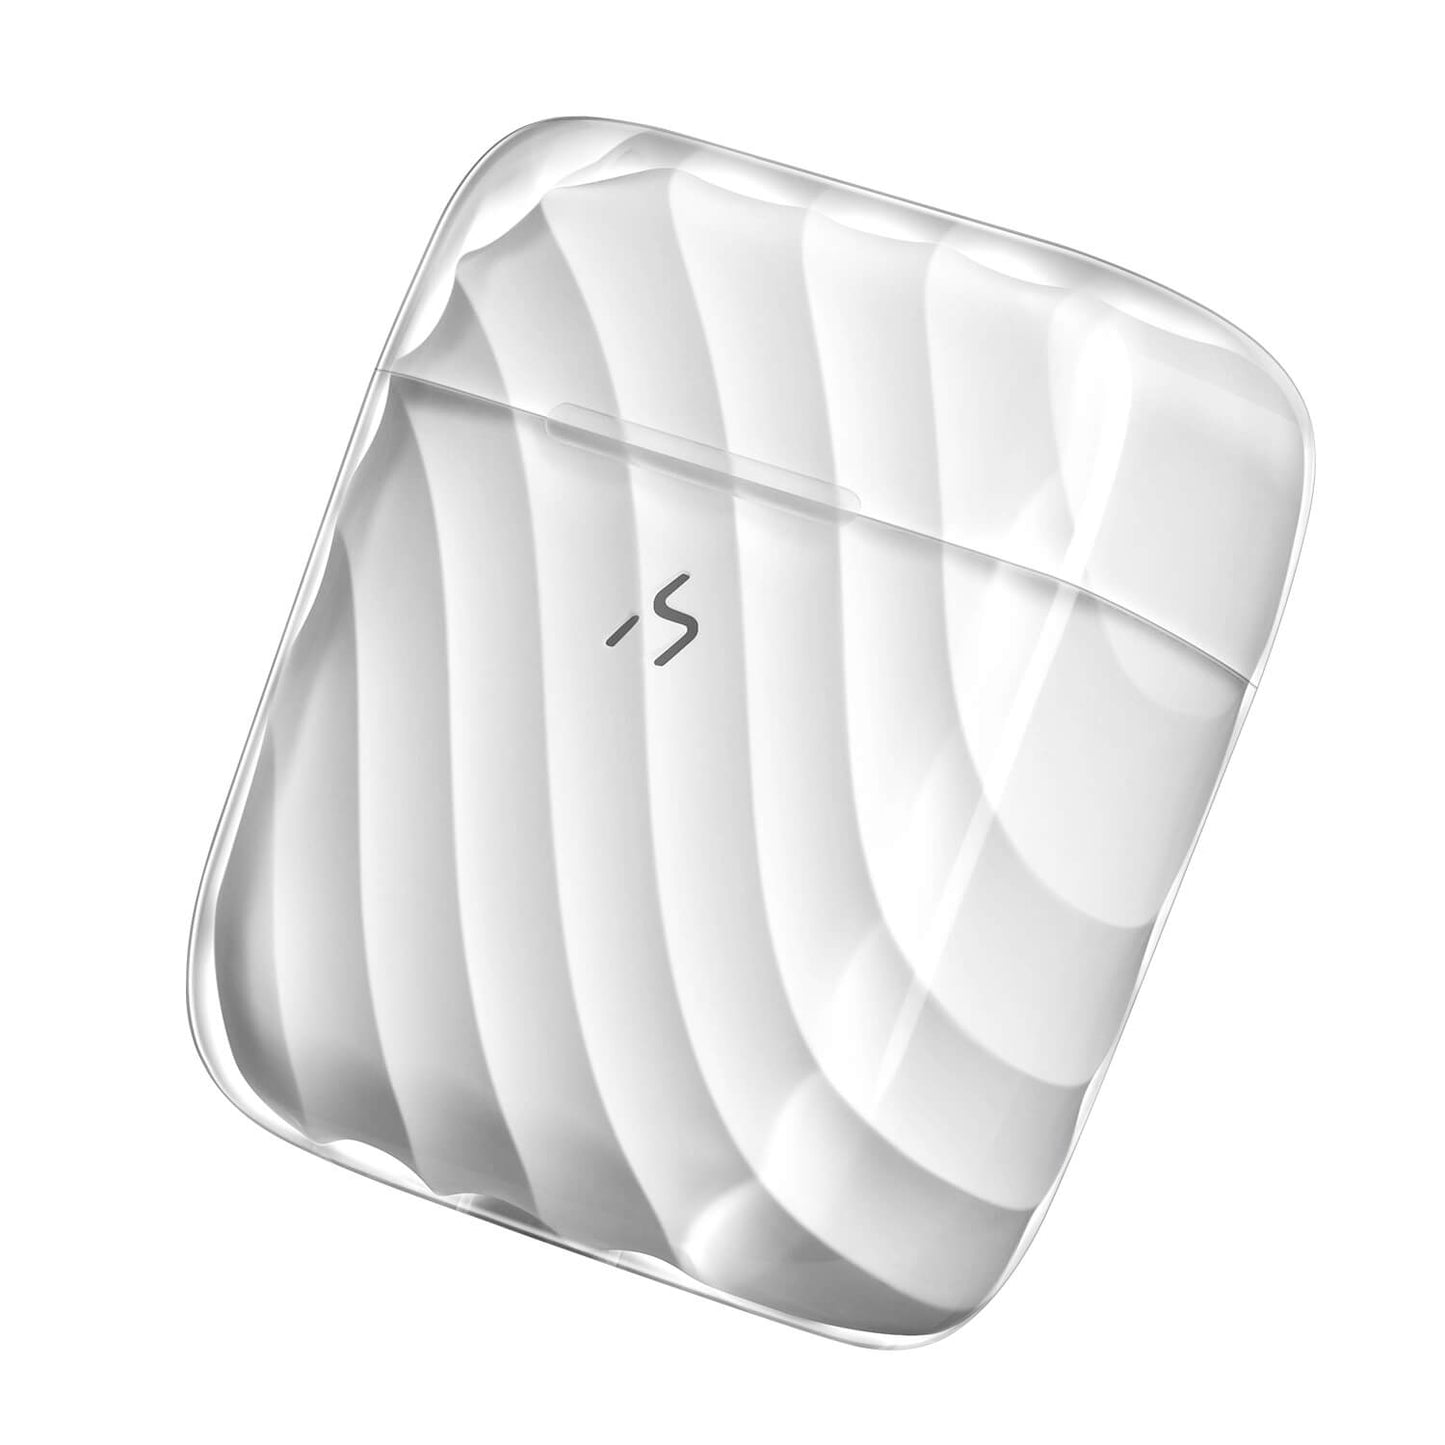 HAKII ICE Lite 哈氪零度青春版低延迟无线耳塞 - 适用于 Android 和 iPhone（白色）